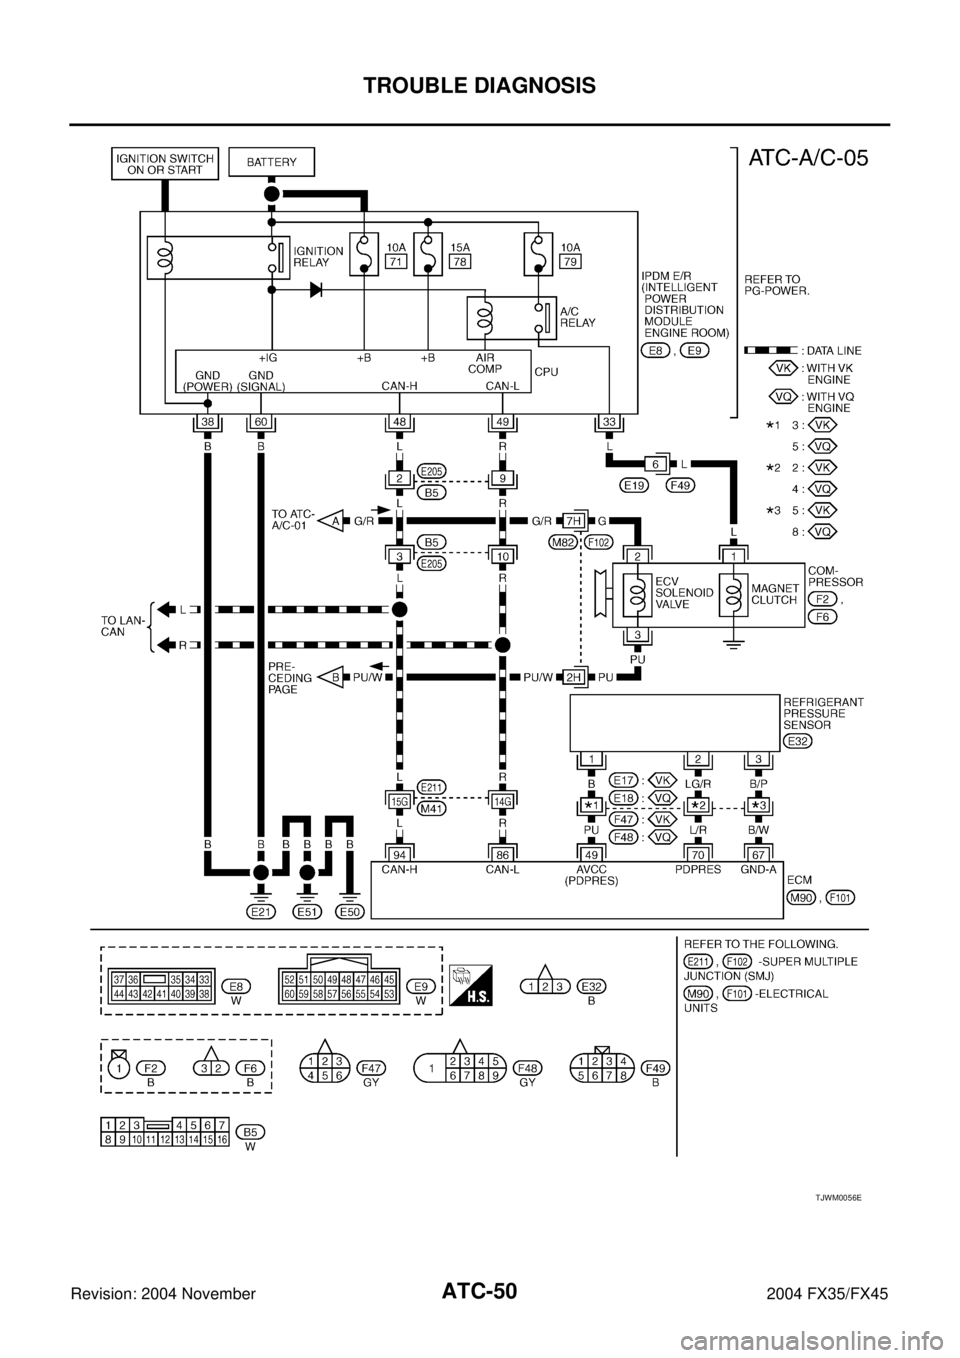 INFINITI FX35 2004  Service Manual ATC-50
TROUBLE DIAGNOSIS
Revision: 2004 November 2004 FX35/FX45
TJWM0056E 